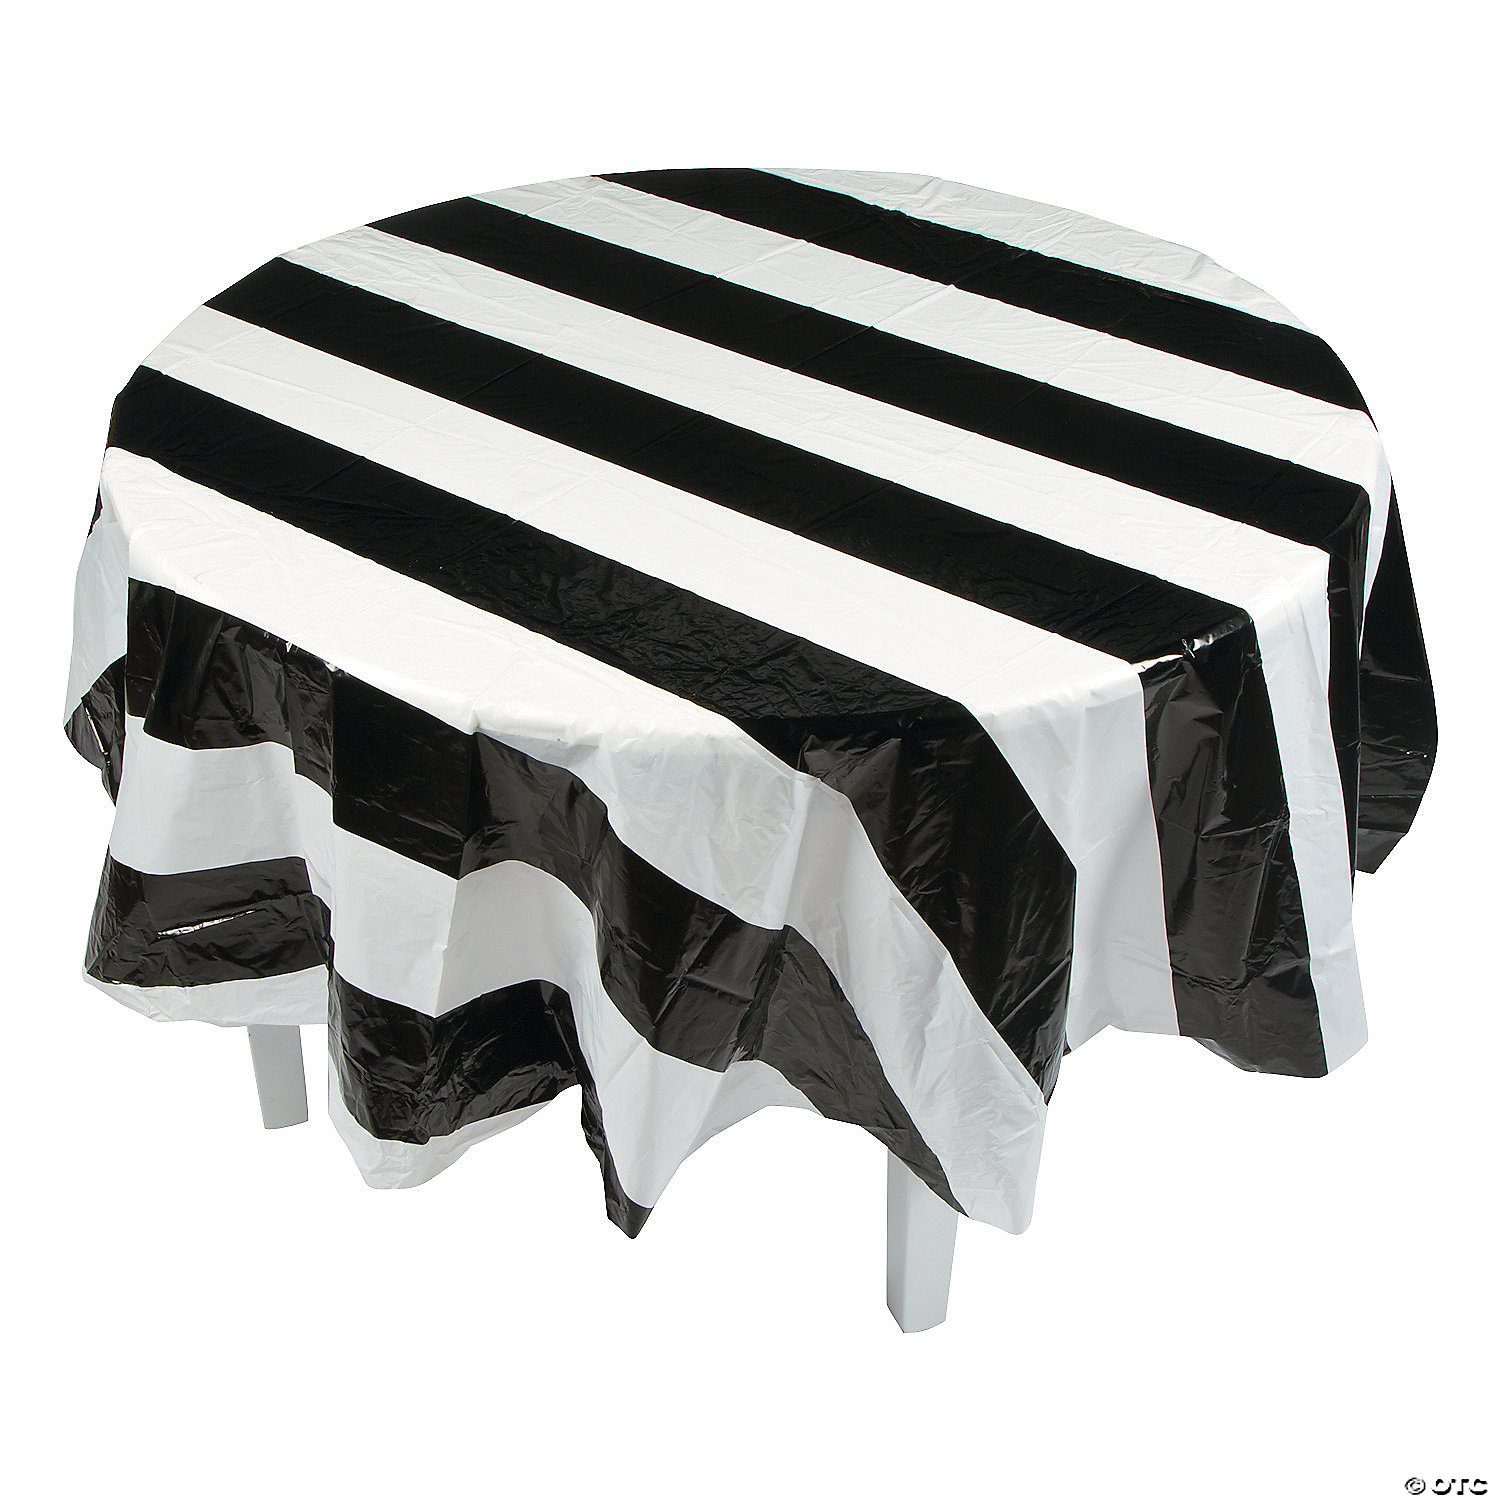 White Stripe Round Plastic Tablecloth, Black Round Tablecloth